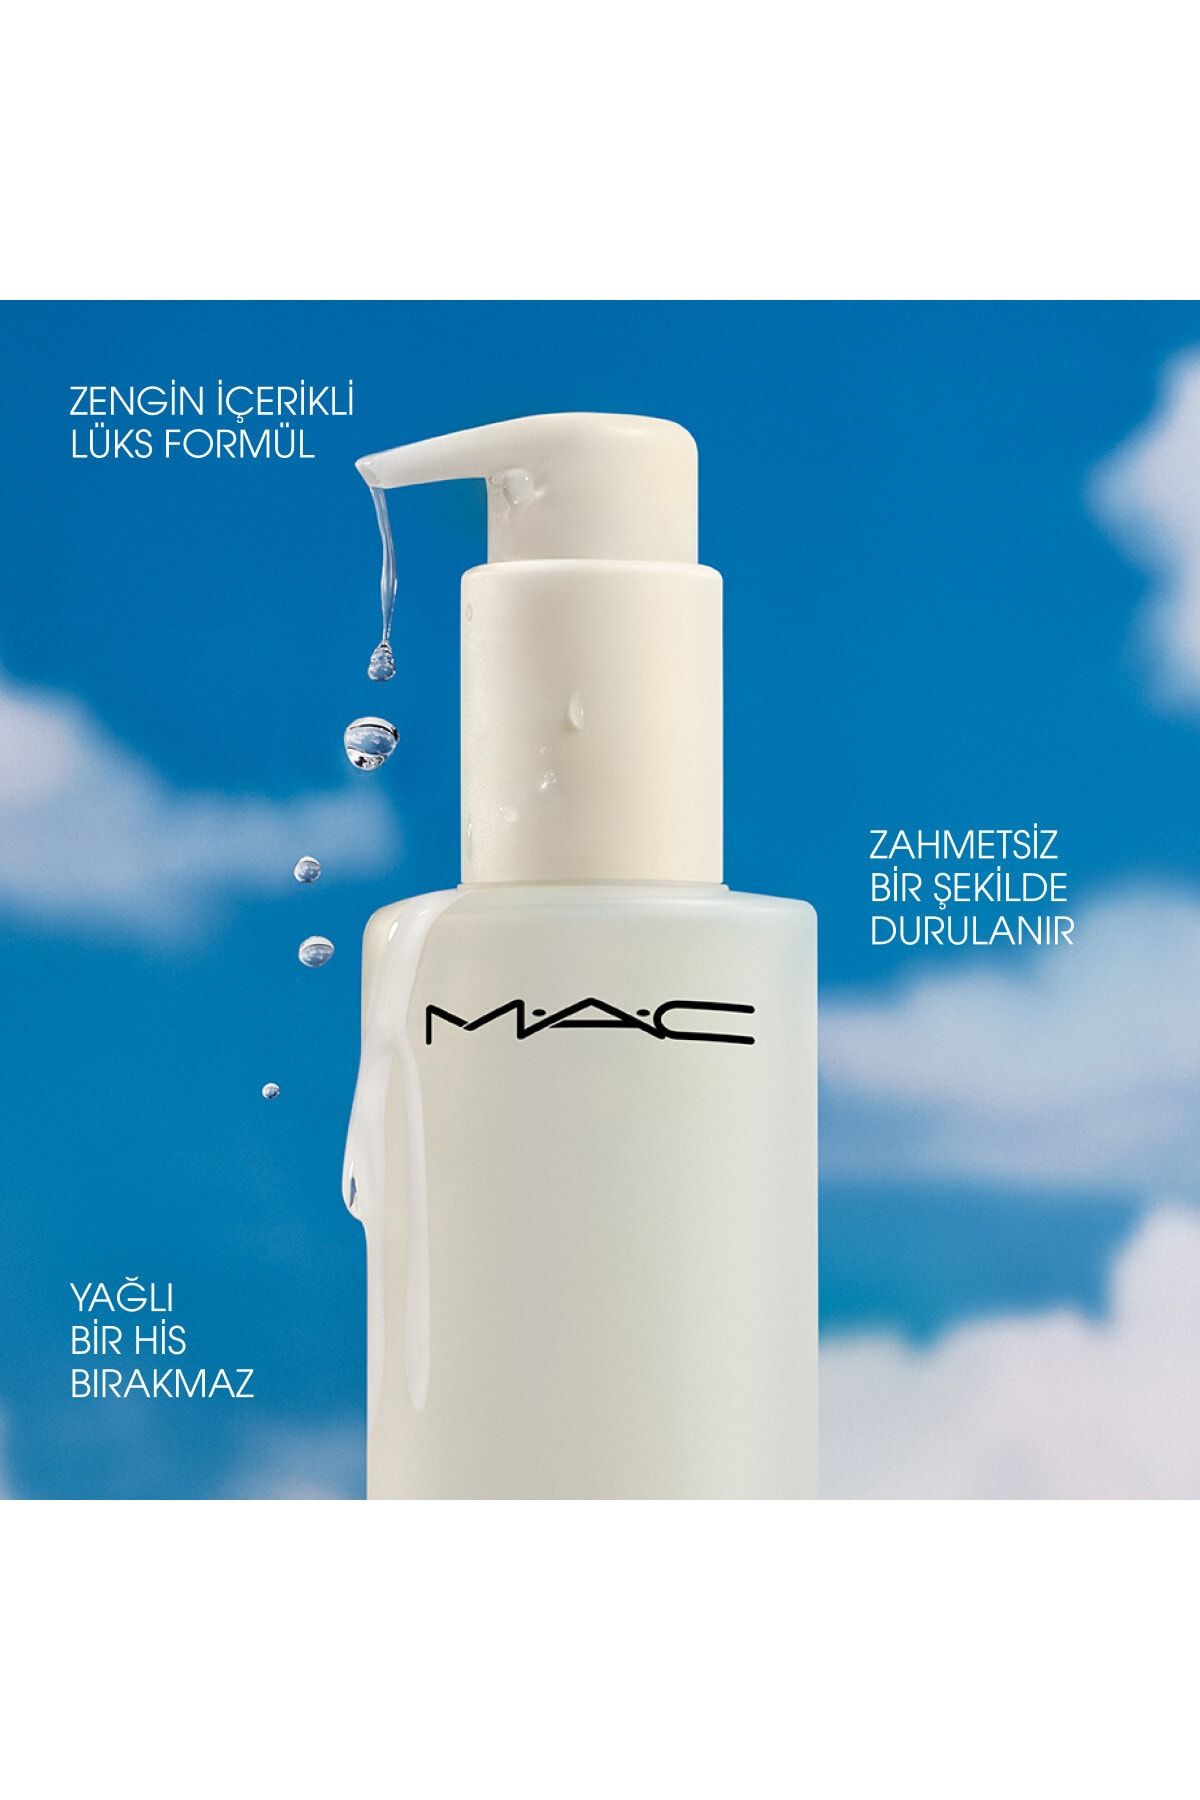 Mac روغن پاک کننده آرایش و پوست Hyper Real™ حفظ تعادل رطوبت پوست 30میل